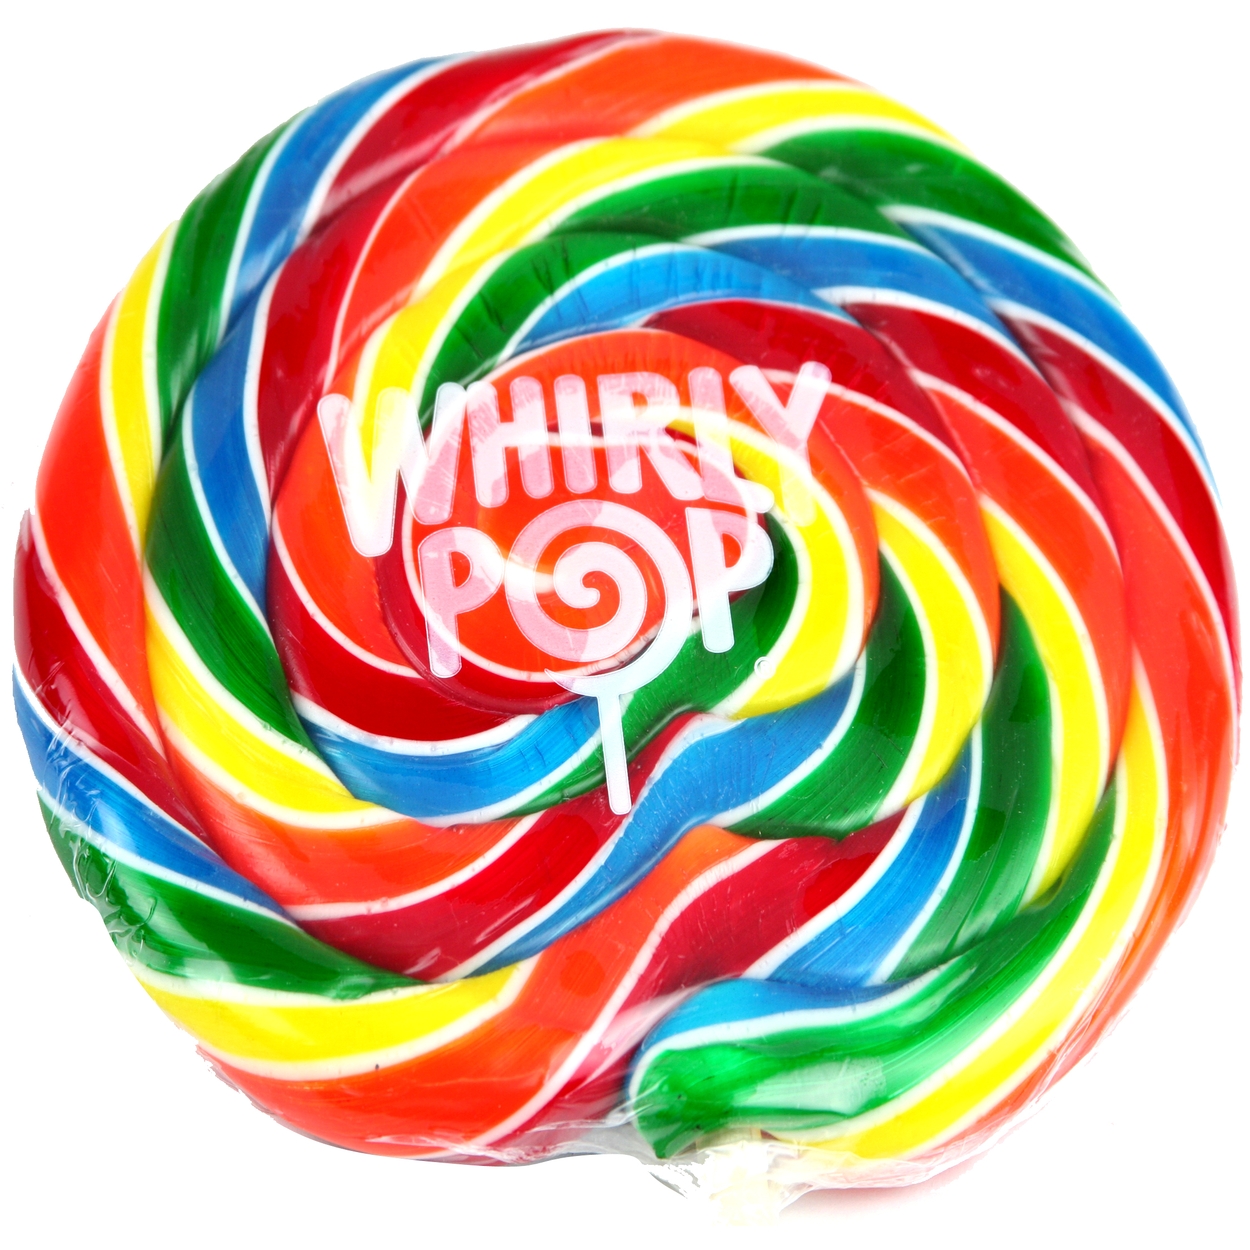 weird swirl lollipops